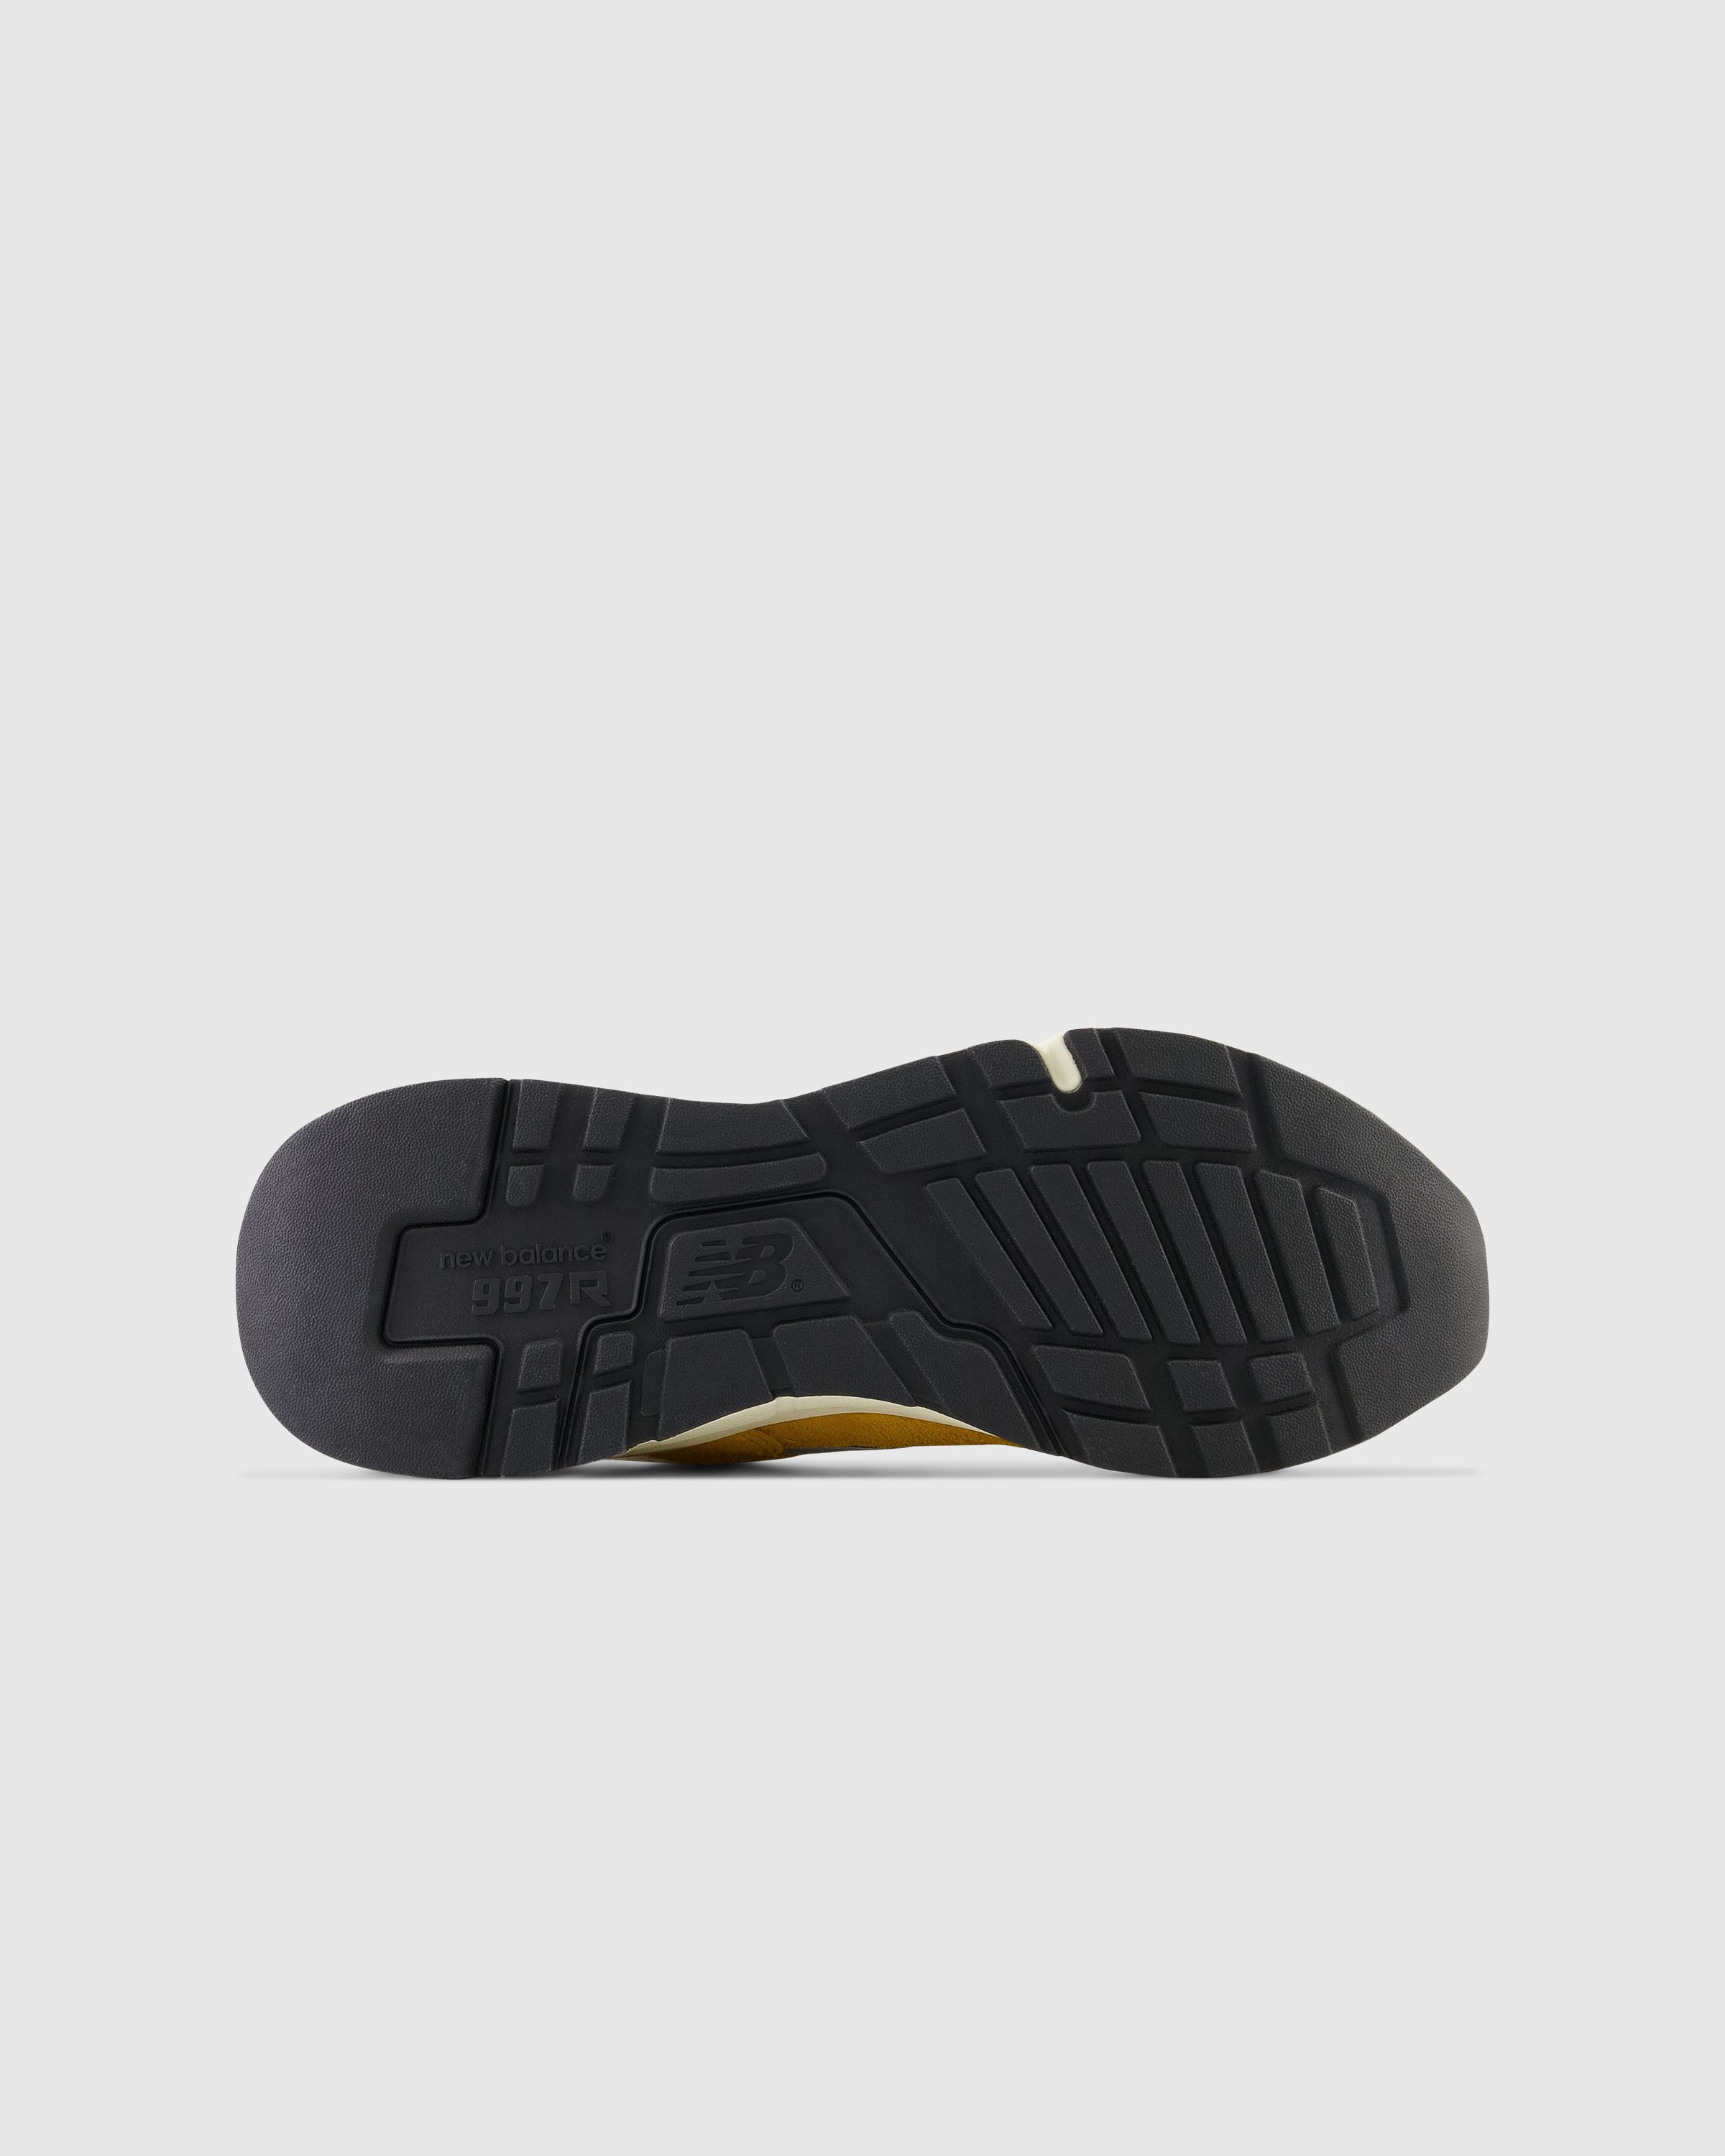 New Balance - U 997R CB Varsity Gold - Footwear - Yellow - Image 5